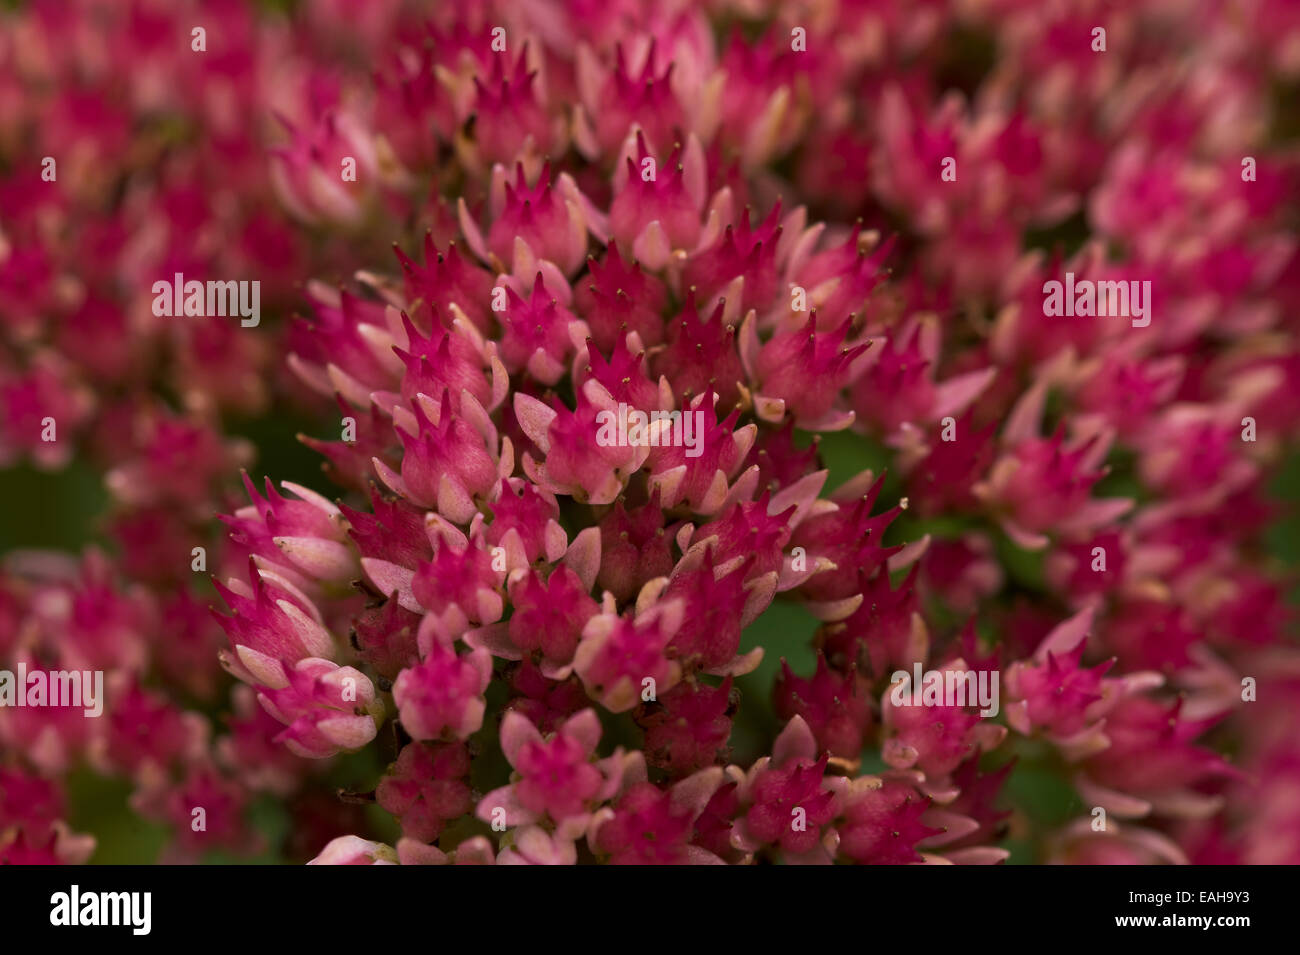 Pink sedum flower head close up Stock Photo